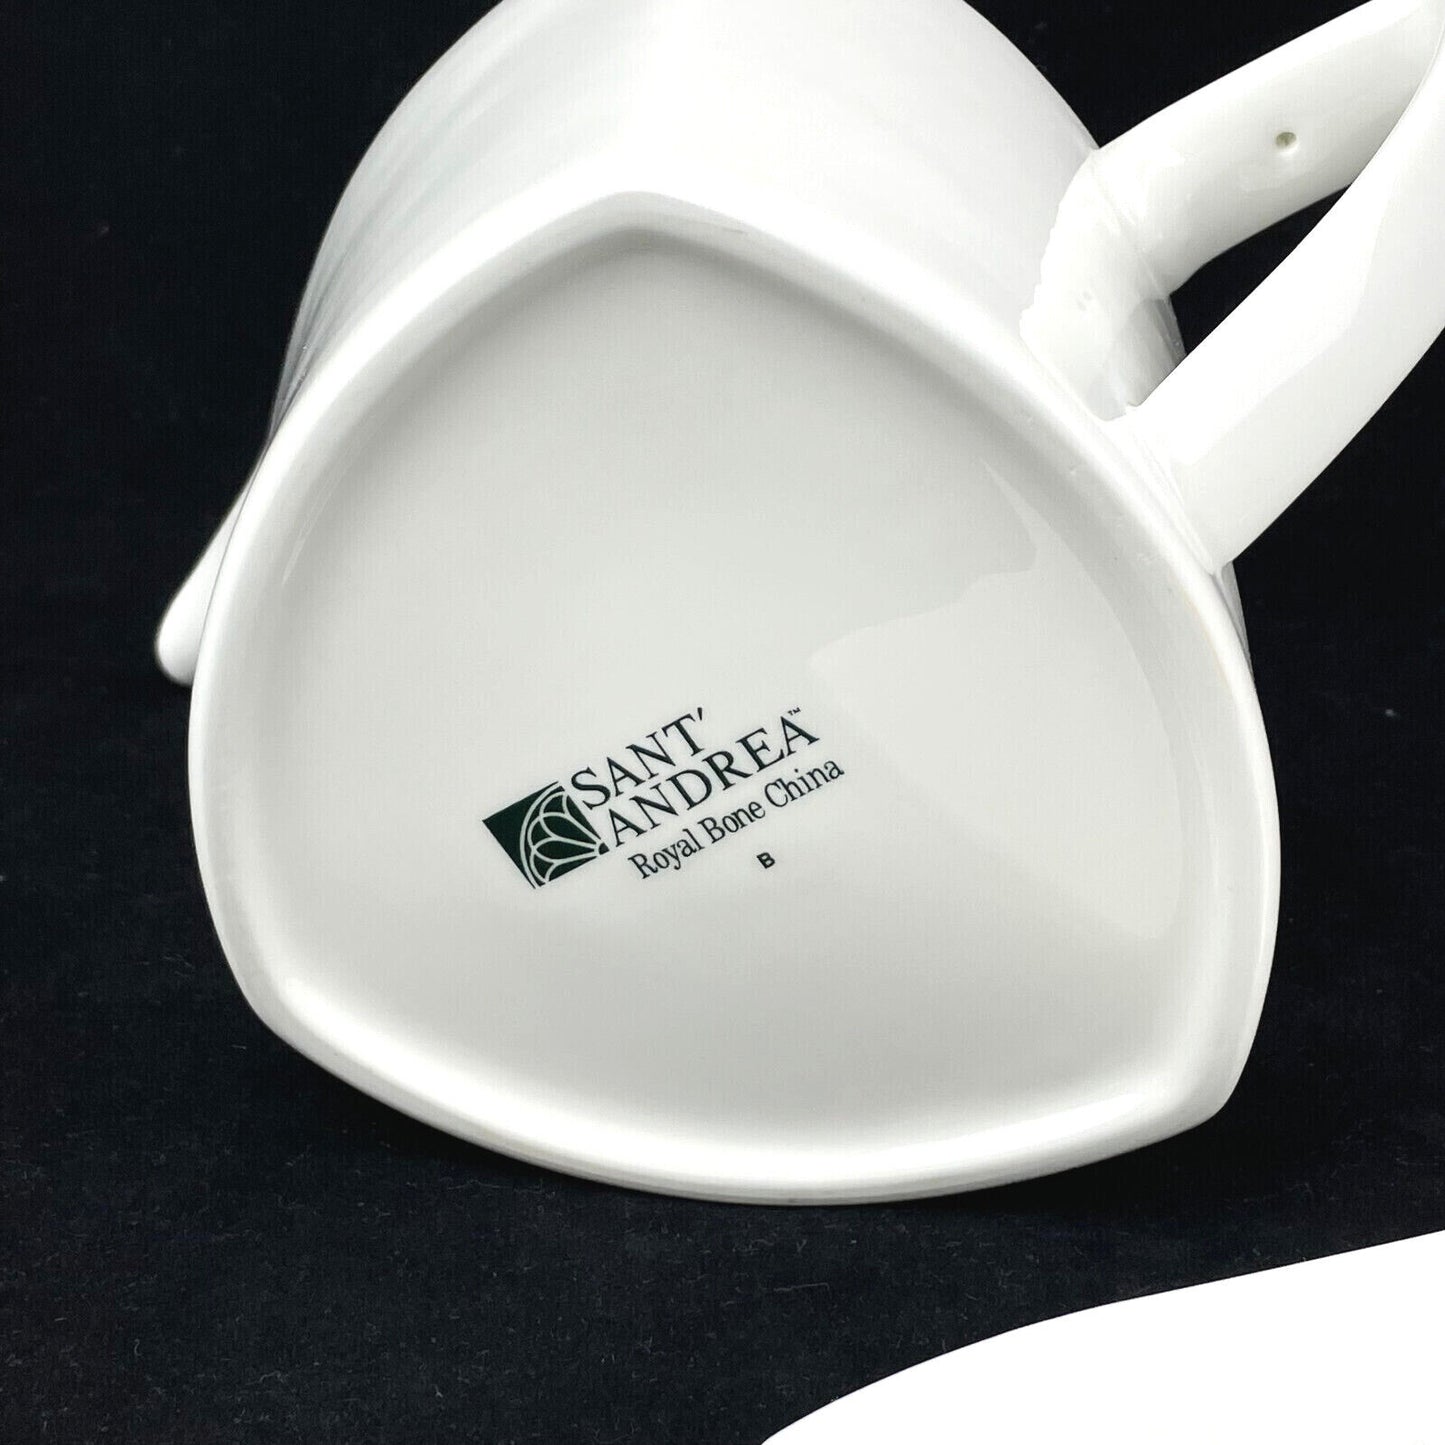 Unique Mid-Century Angular Teapot by Oneida